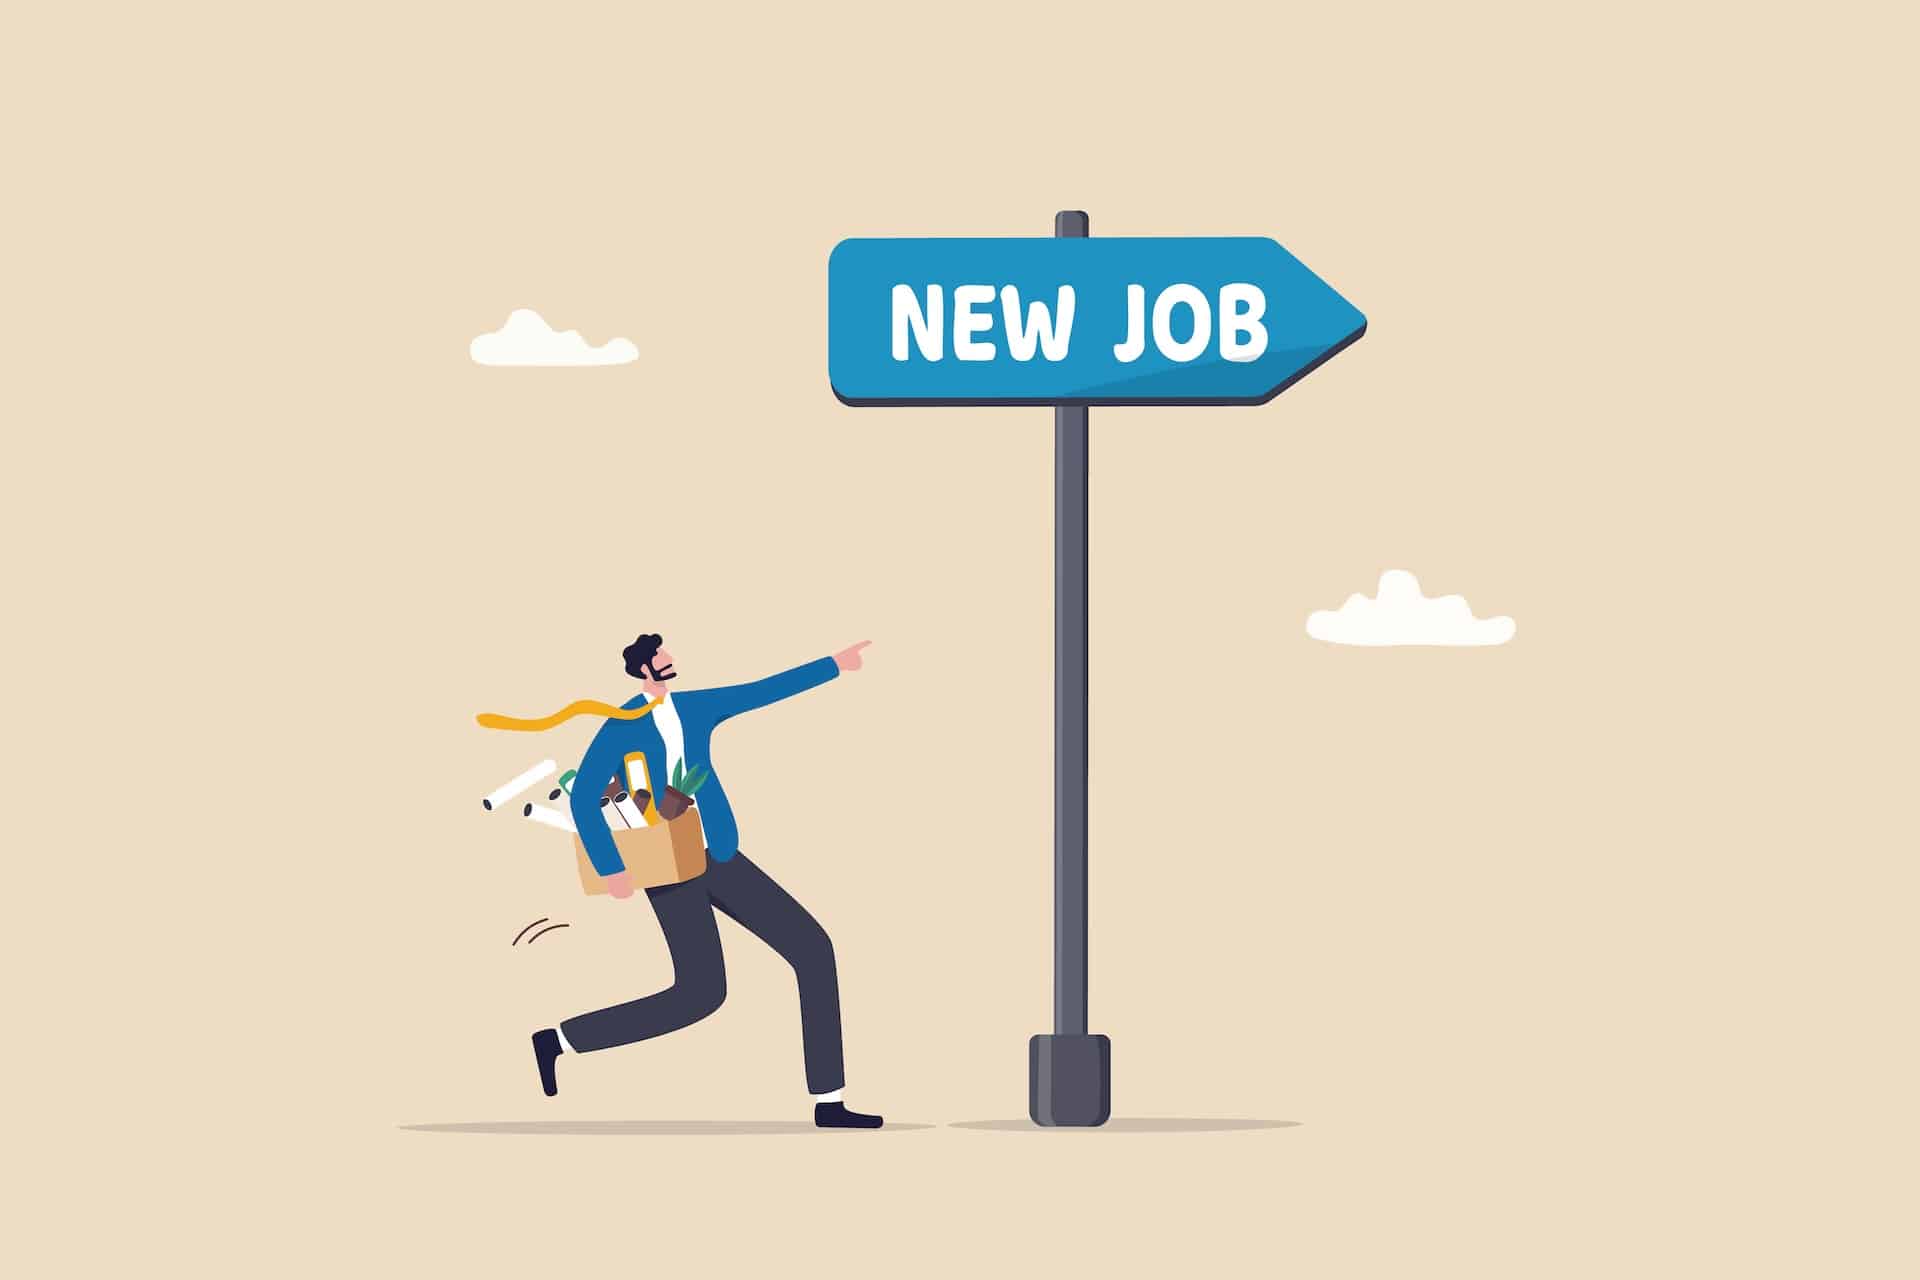 Man Running Towards 'New Job' in Changing Job Market